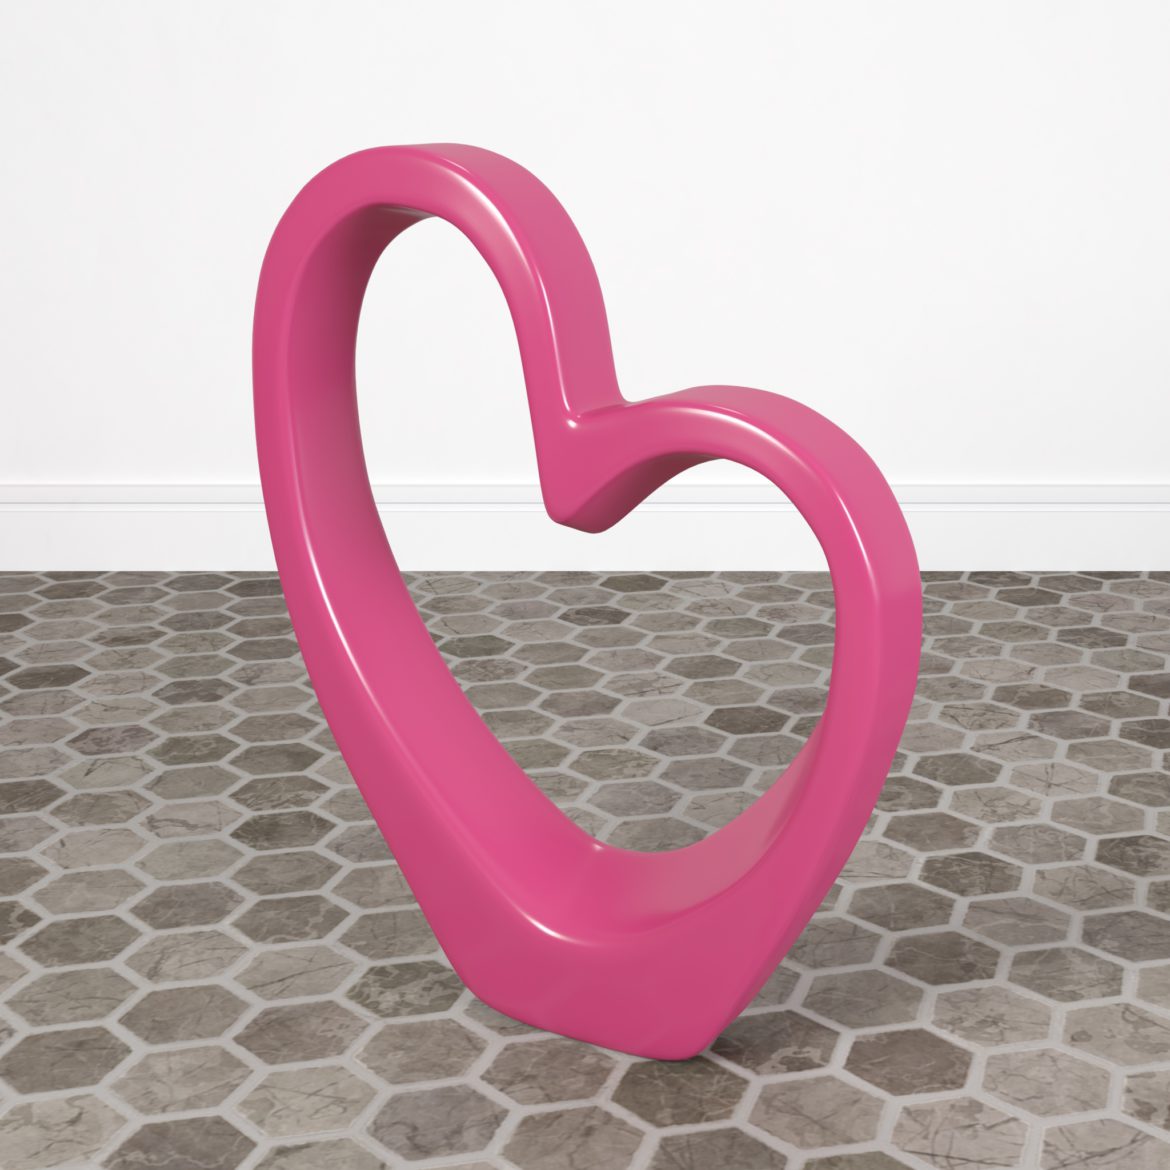  <a class="continue" href="https://www.flatpyramid.com/3d-models/furniture-3d-models/home-office-furniture/other-home-and-office-furniture/heart-sculpture-interior-decor/">Continue Reading<span> Heart Sculpture Interior Decor</span></a>